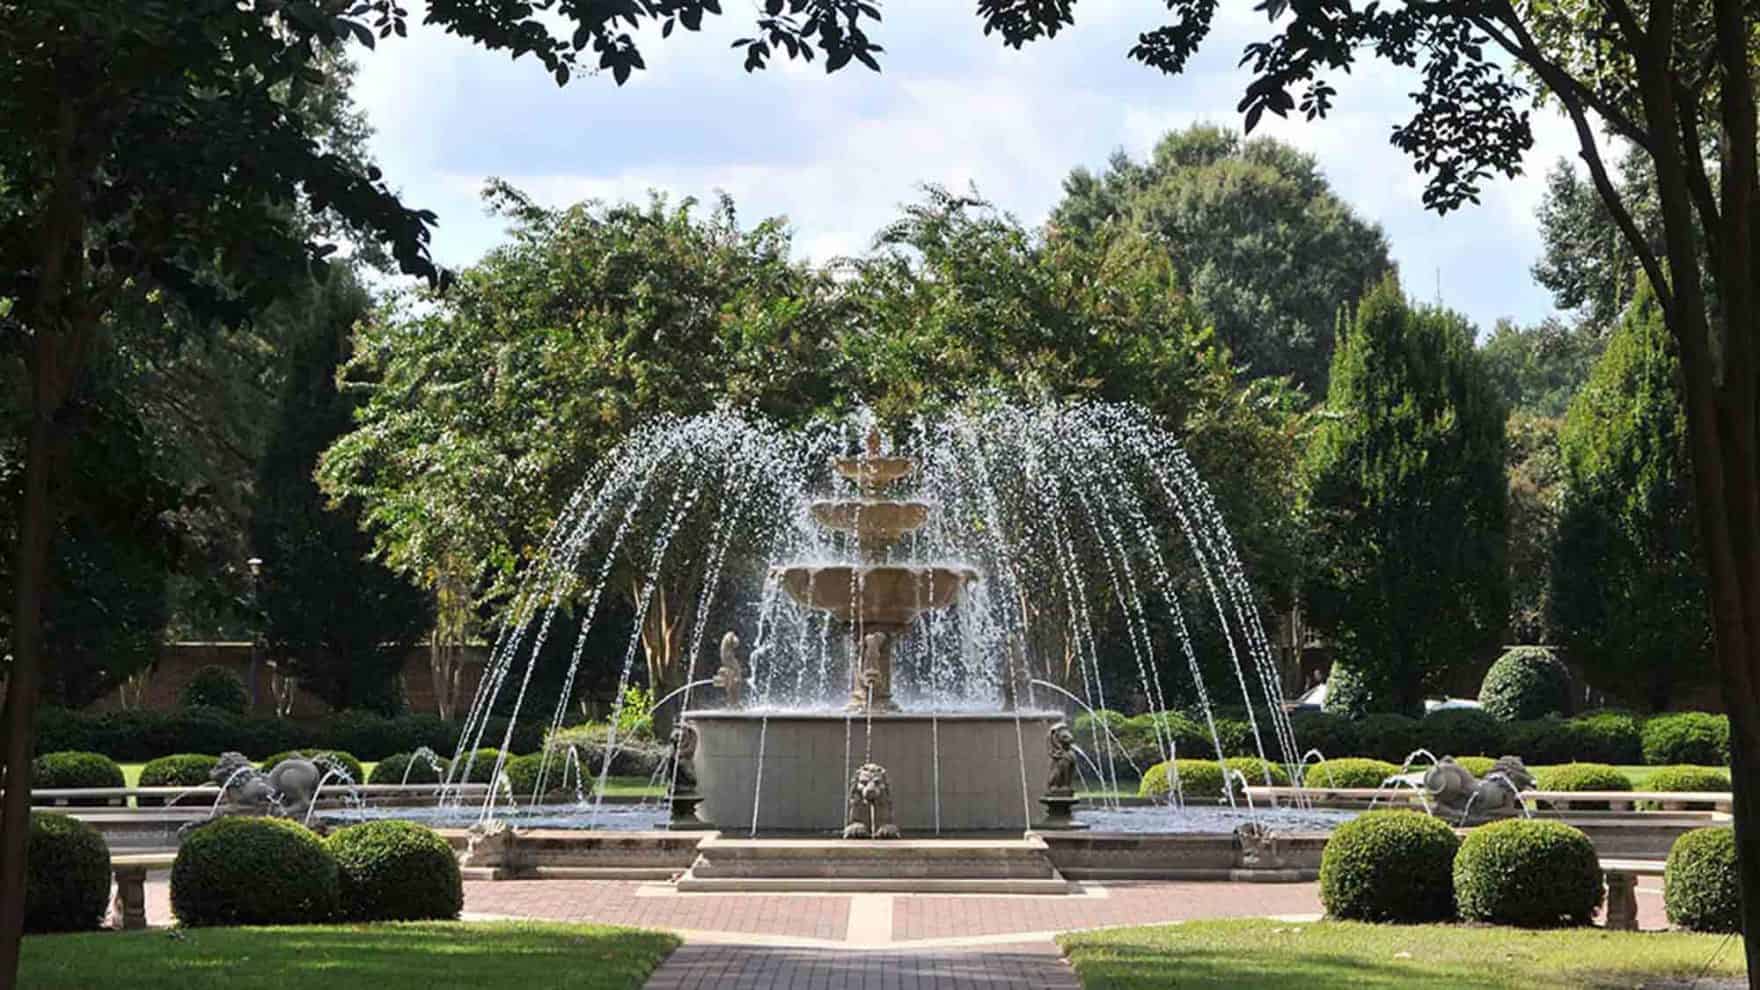 The fountain on Regent University's campus in Virginia Beach, VA 23464.